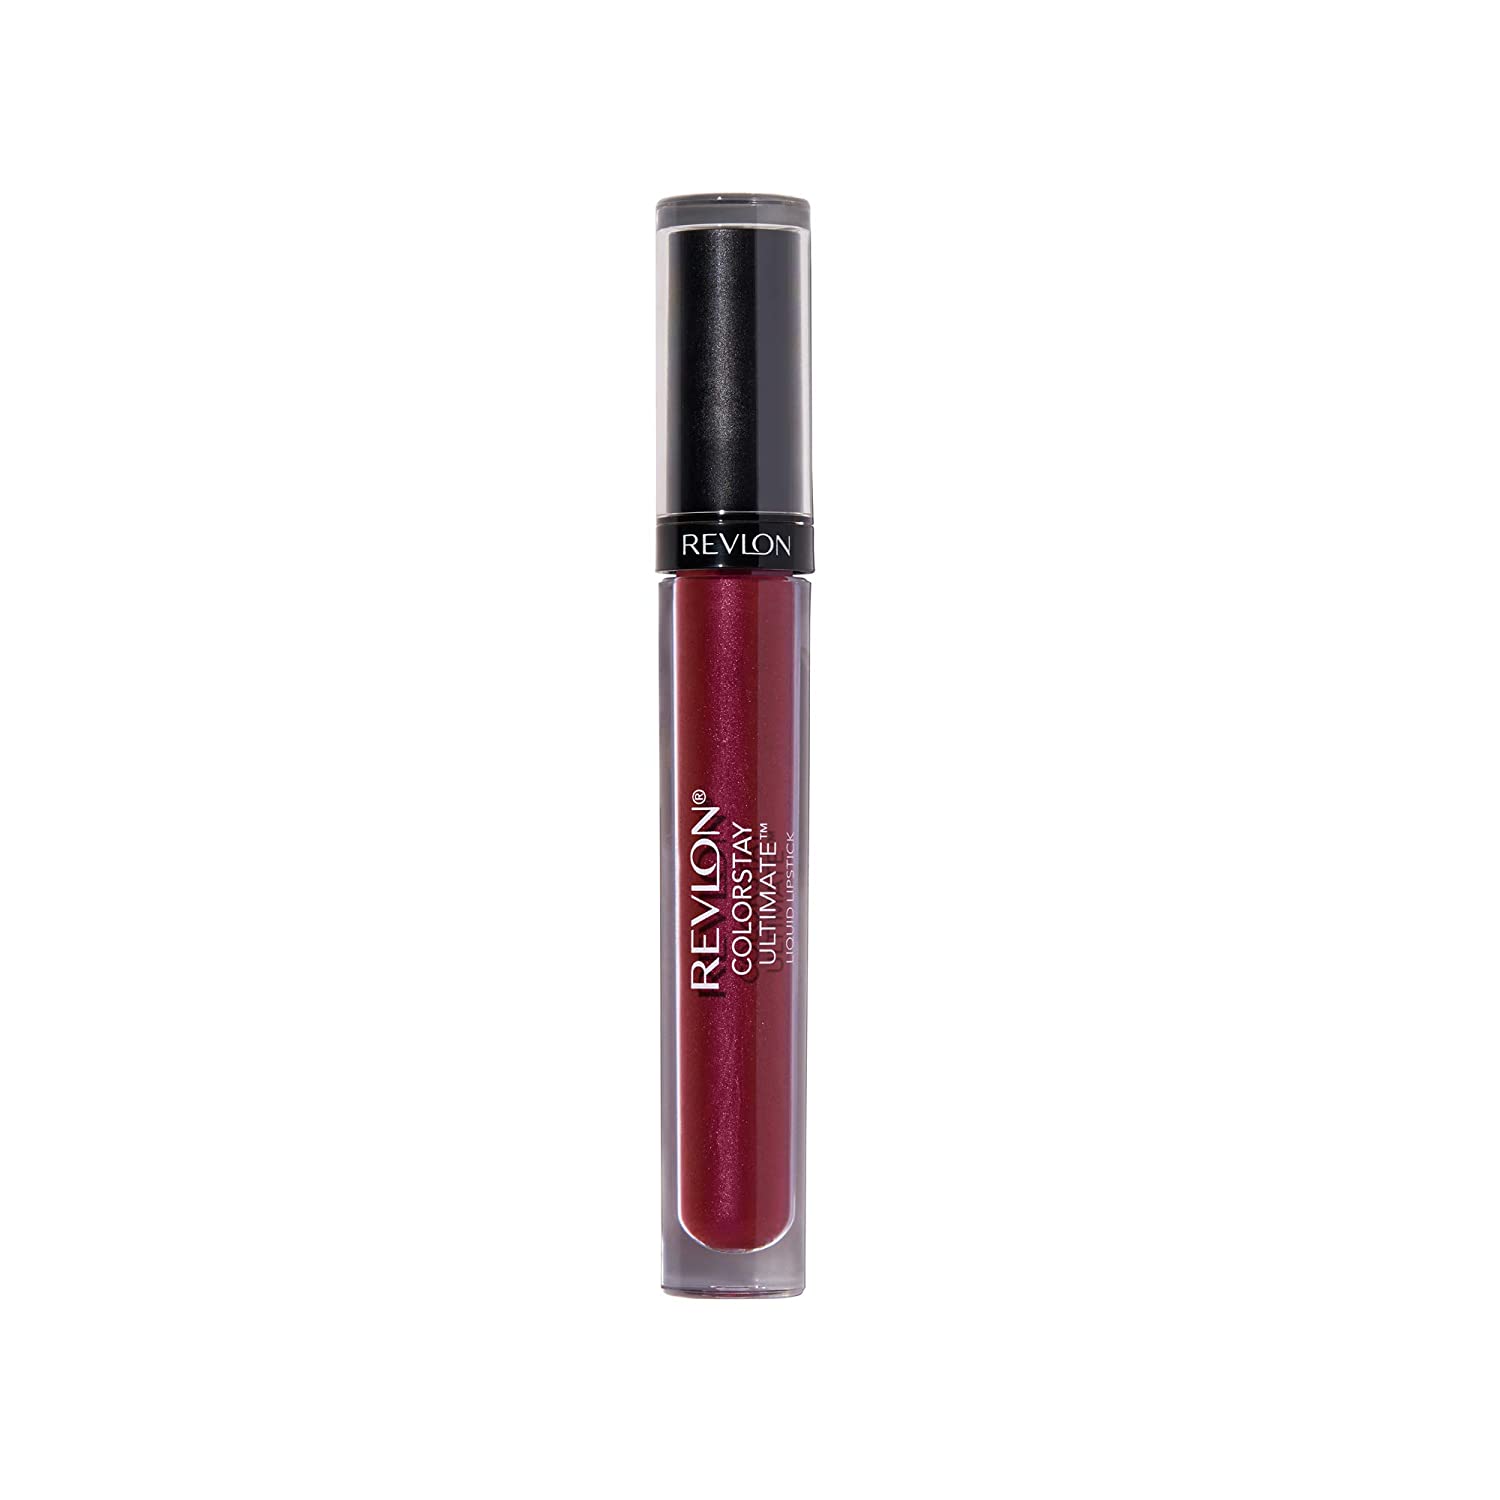 ''Liquid LIPSTICK by Revlon, Face Makeup, ColorStay Ultimate, Longwear Rich Lip Colors, Satin Finish,